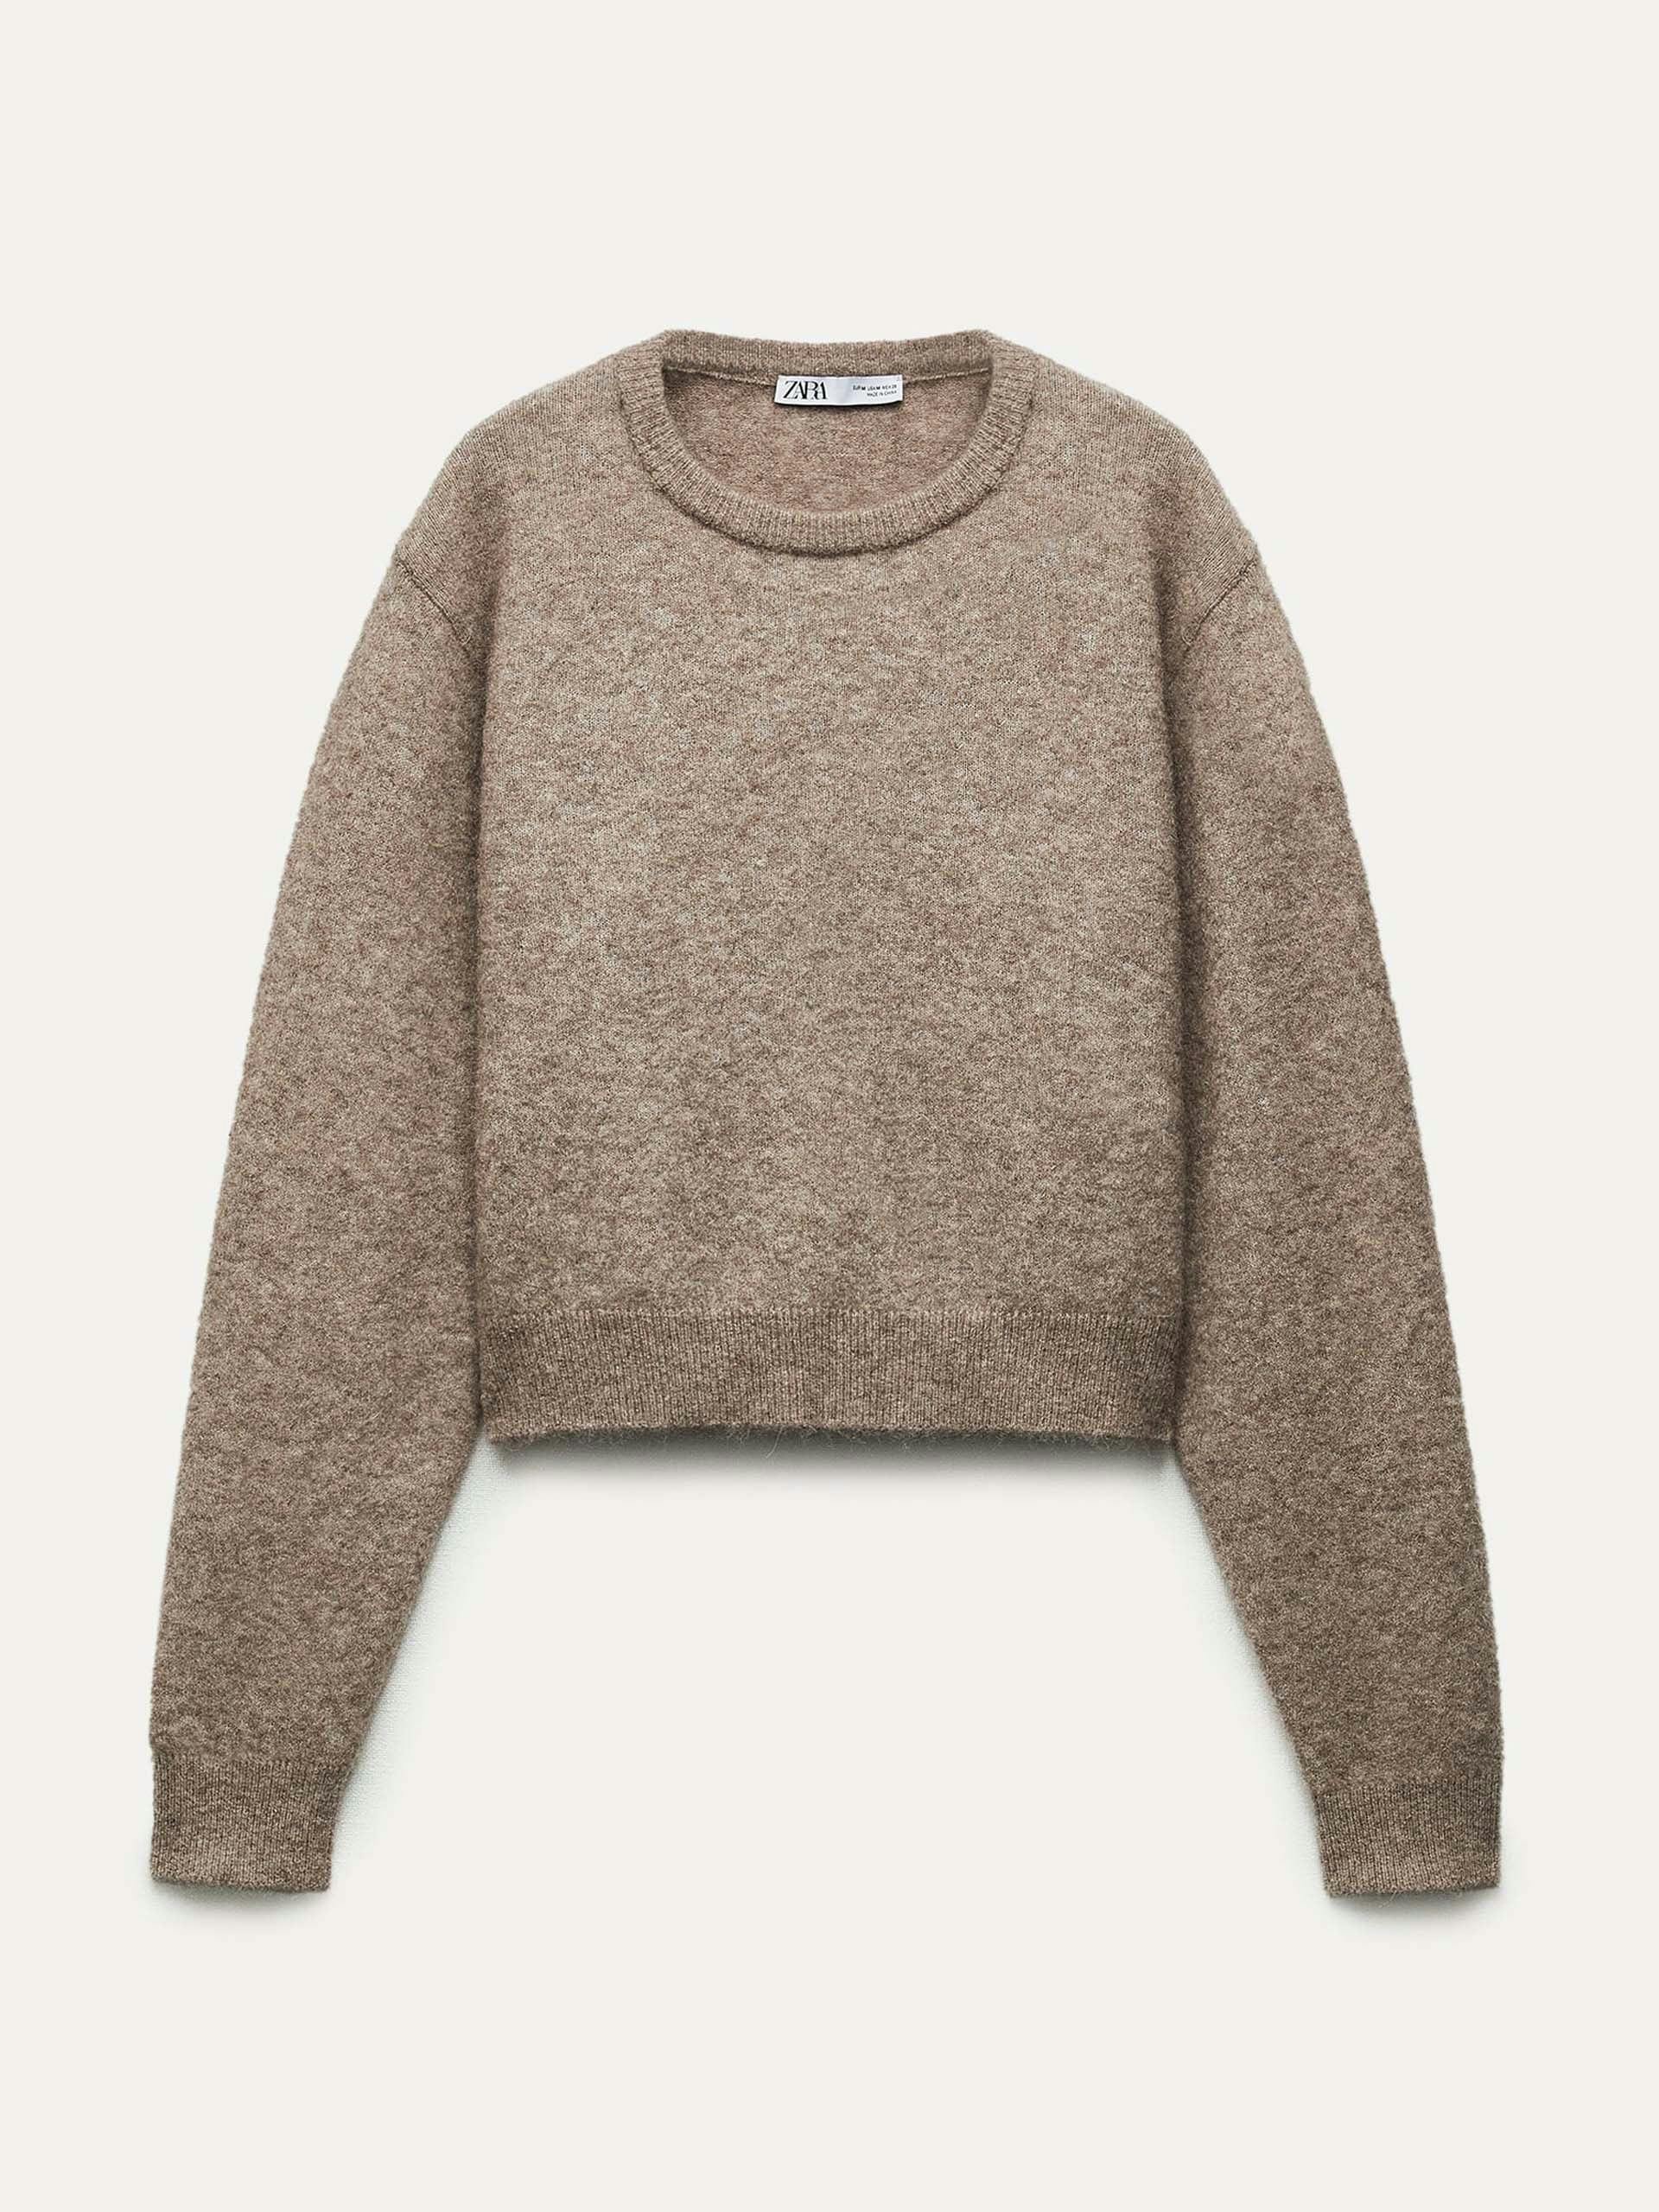 Felt texture knit sweater